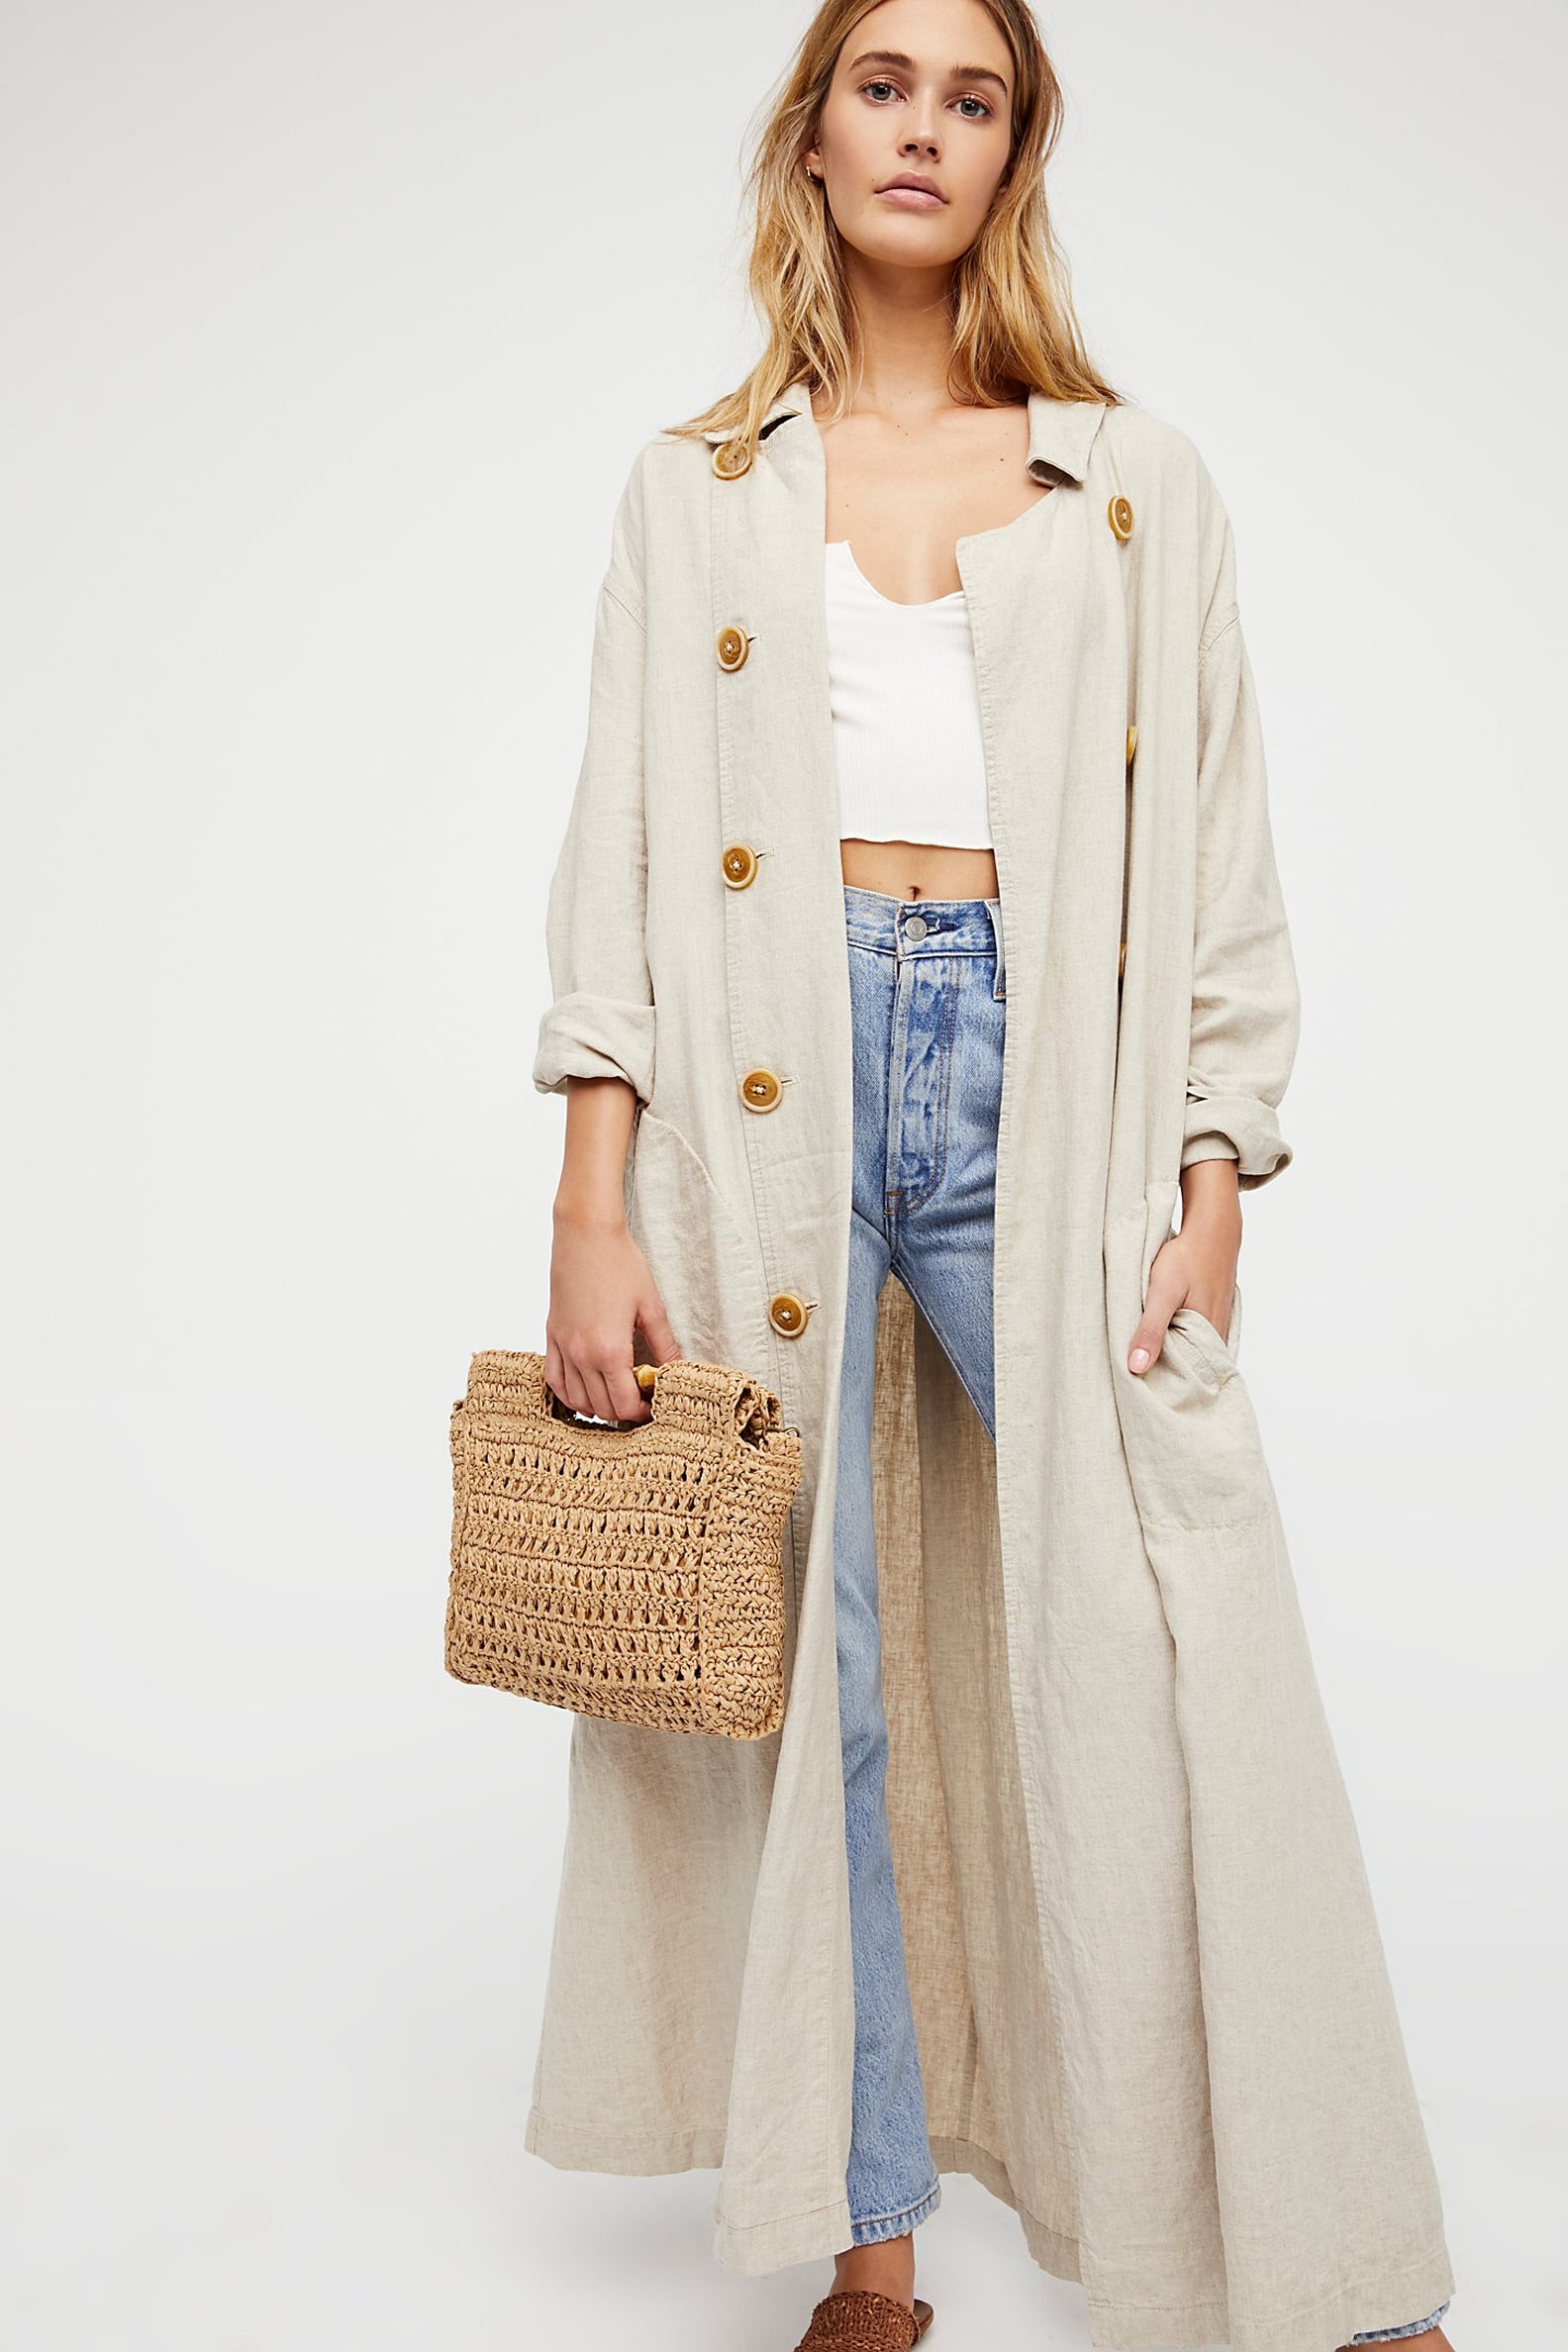 Best Versatile Coats For Women | POPSUGAR Fashion